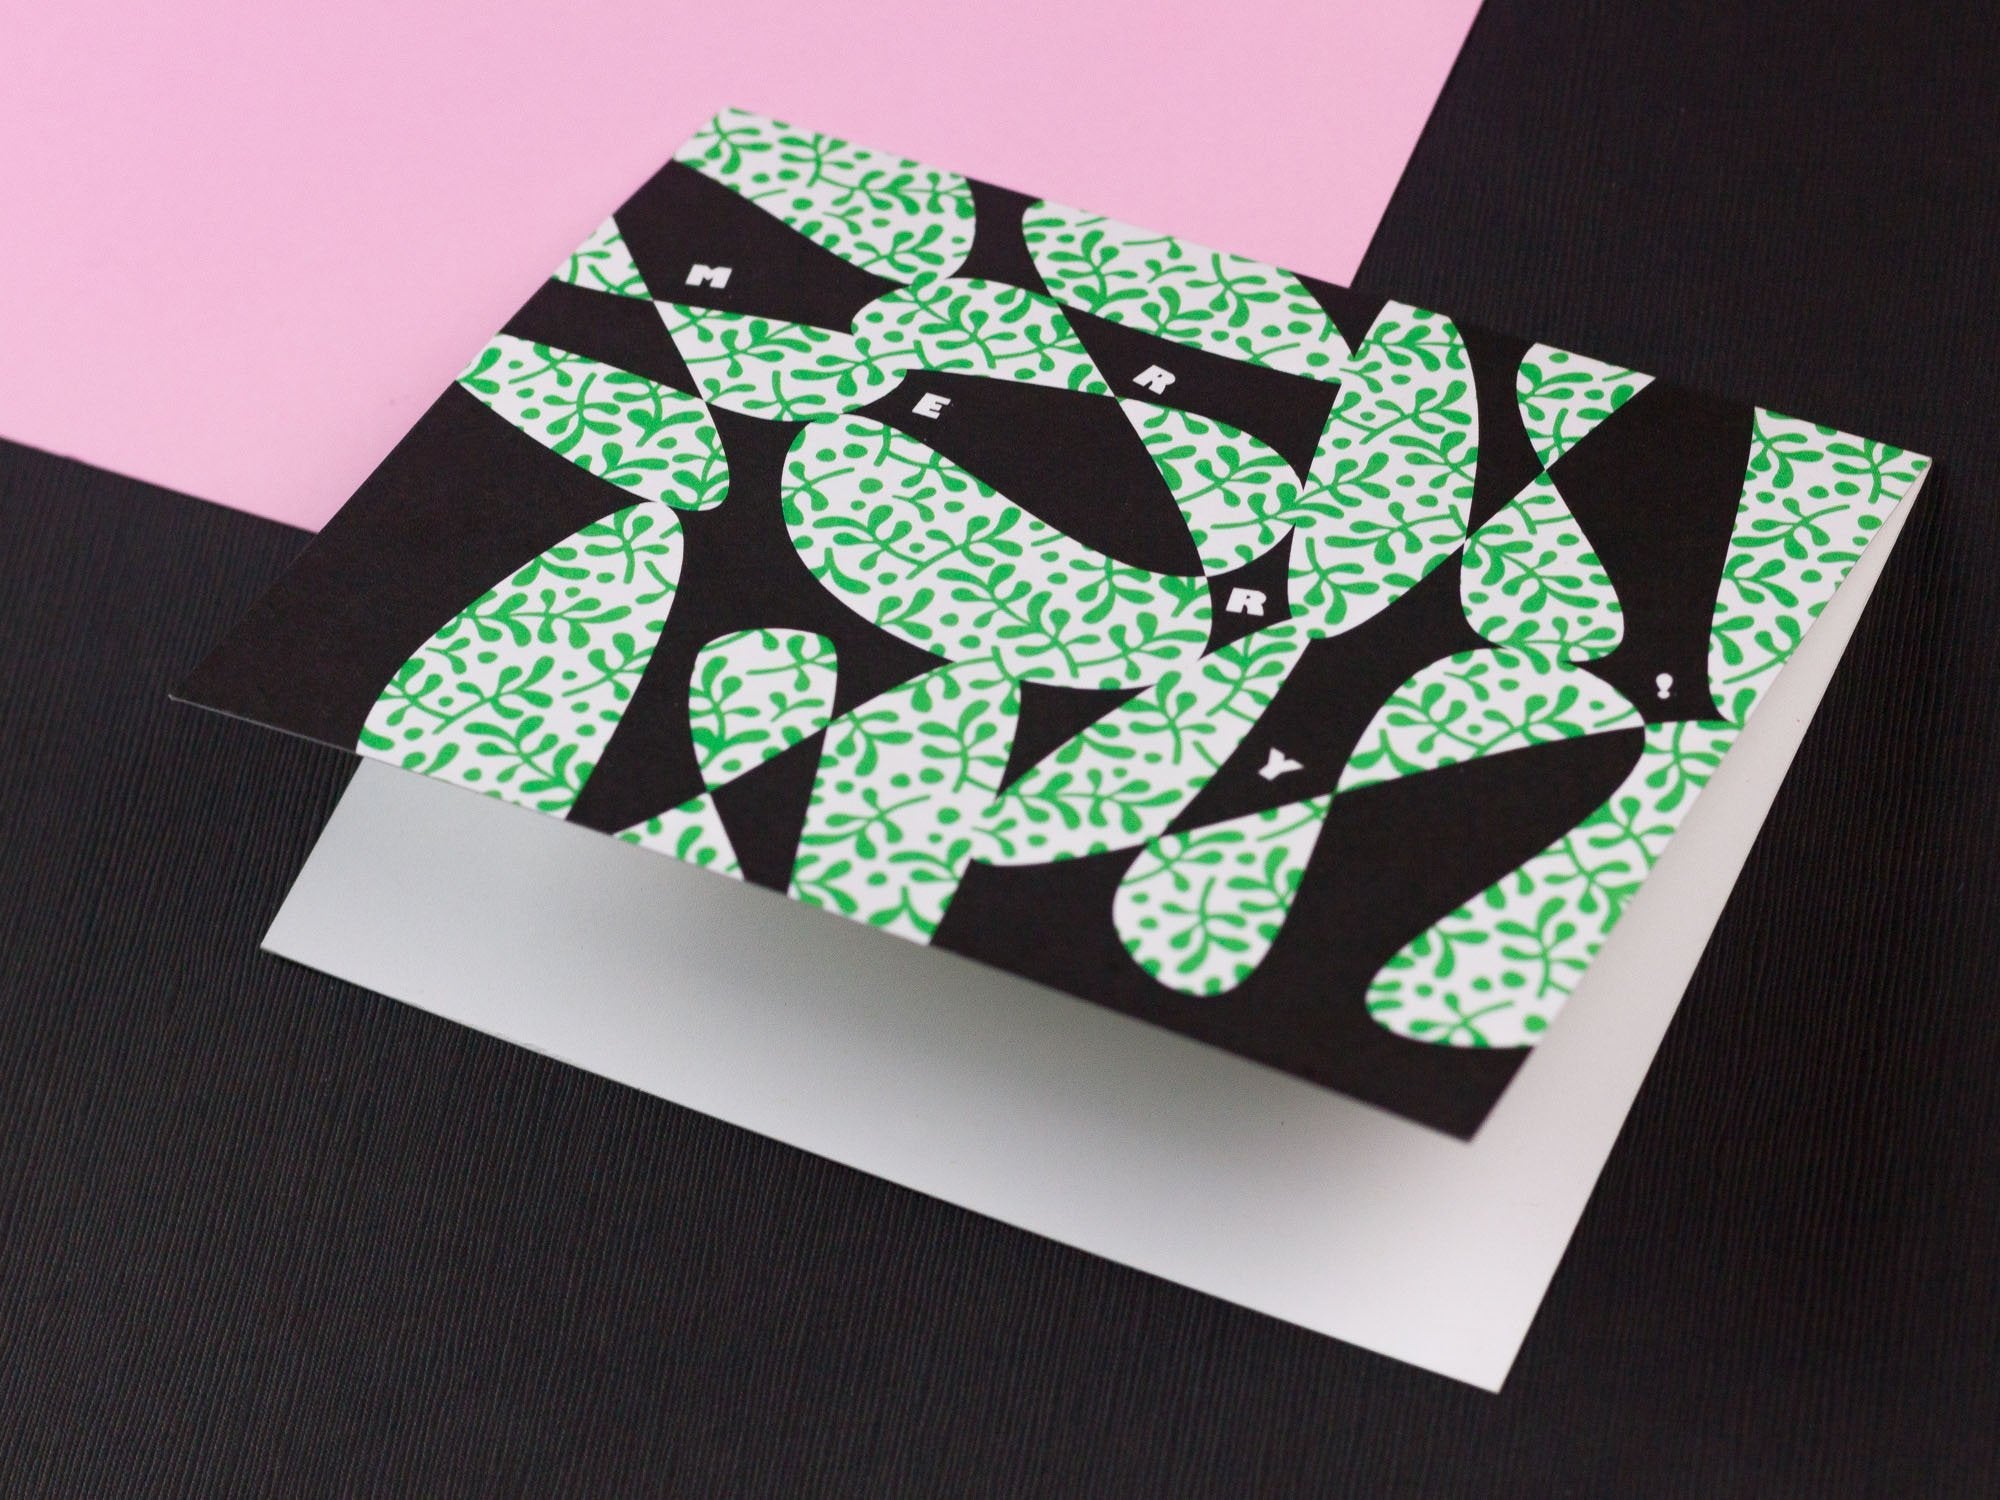 Merry abstract vines pattern mistletoe Christmas holiday card. Designed by @mydarlin_bk